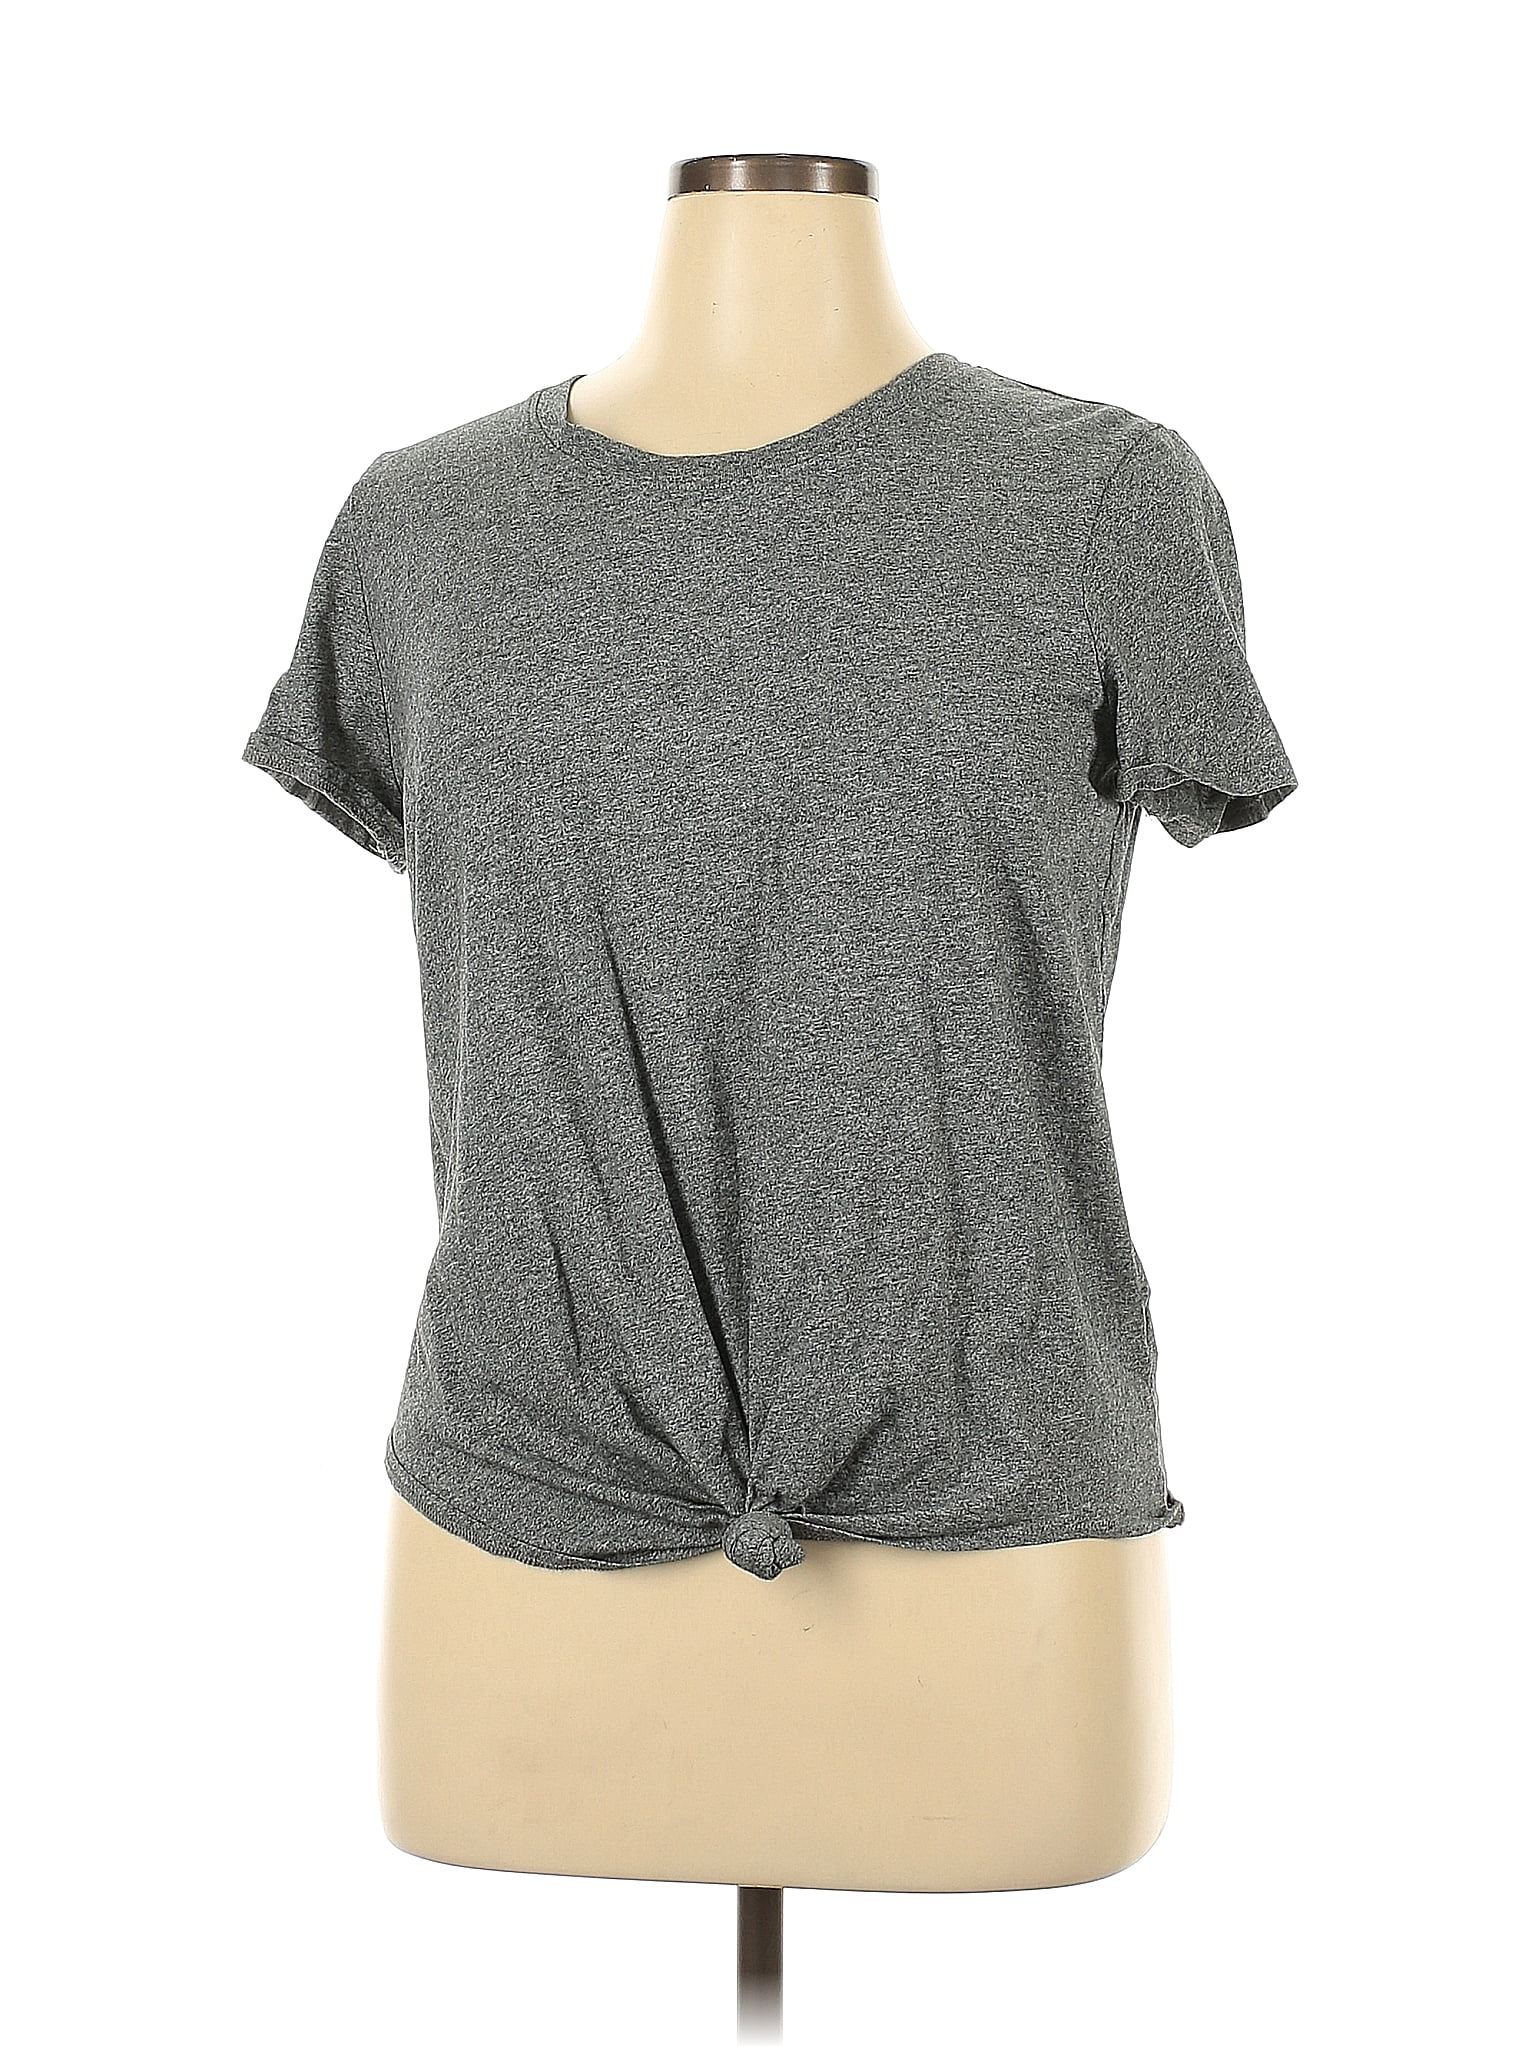 Lucky Brand 100% Cotton Gray Short Sleeve T-Shirt Size S - 59% off